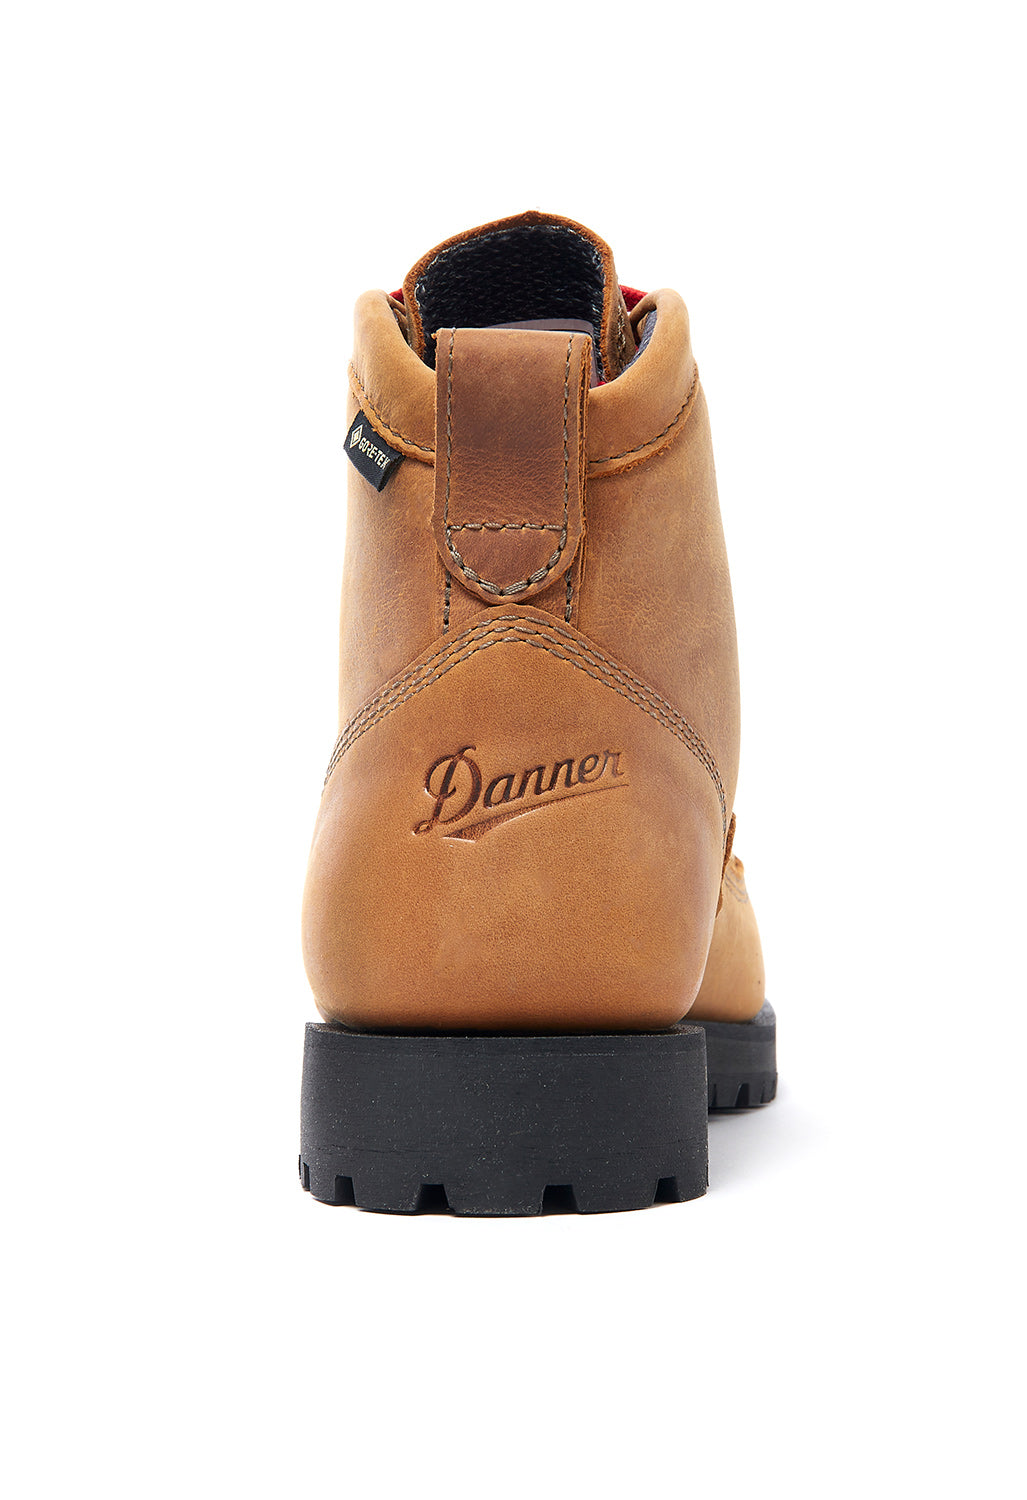 Danner Women's Cedar Grove Boots - Bone Brown GTX